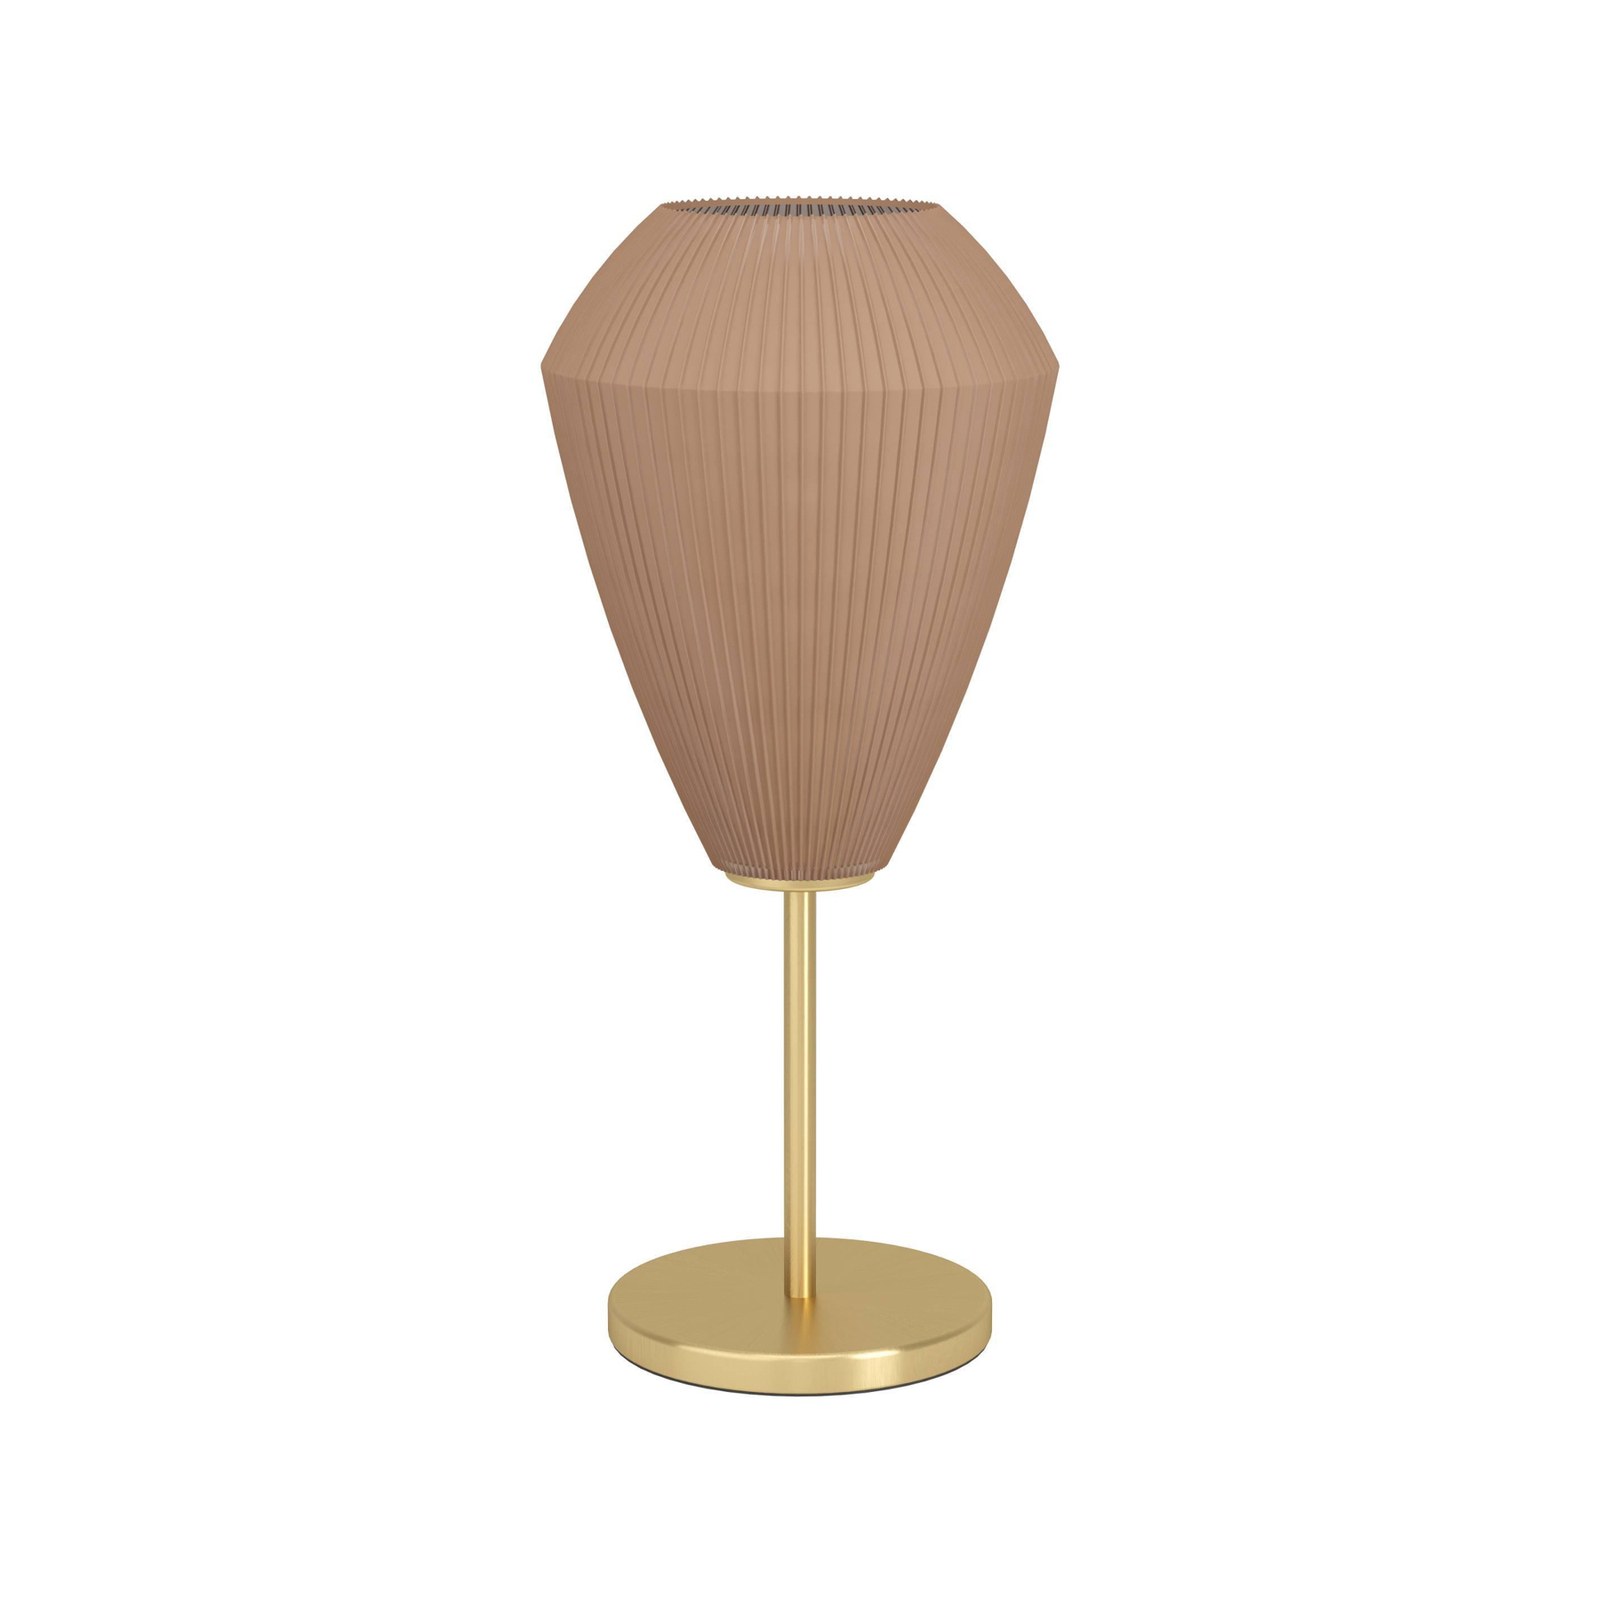 Tischlampe Caprarola, Höhe 46 cm, sandfarben/messing, Glas